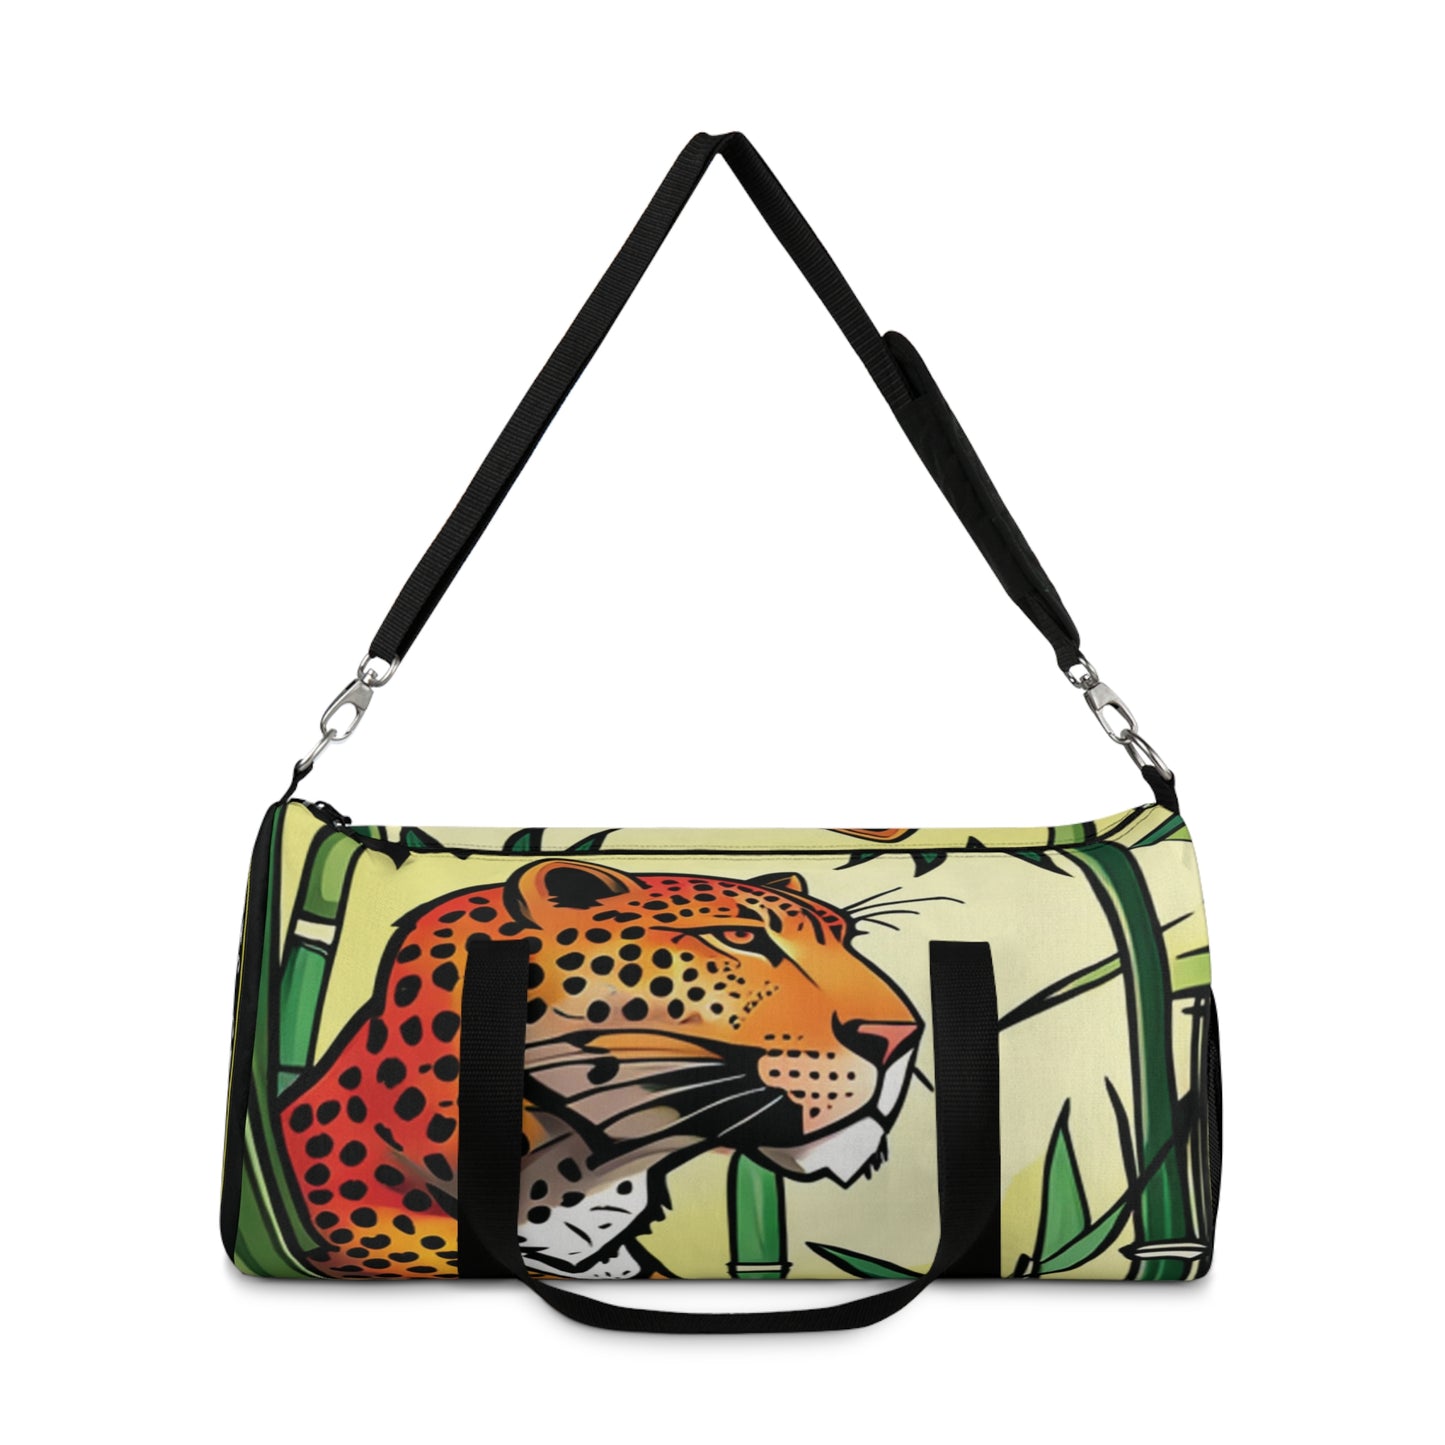 Villari's Leopard Duffel Bag